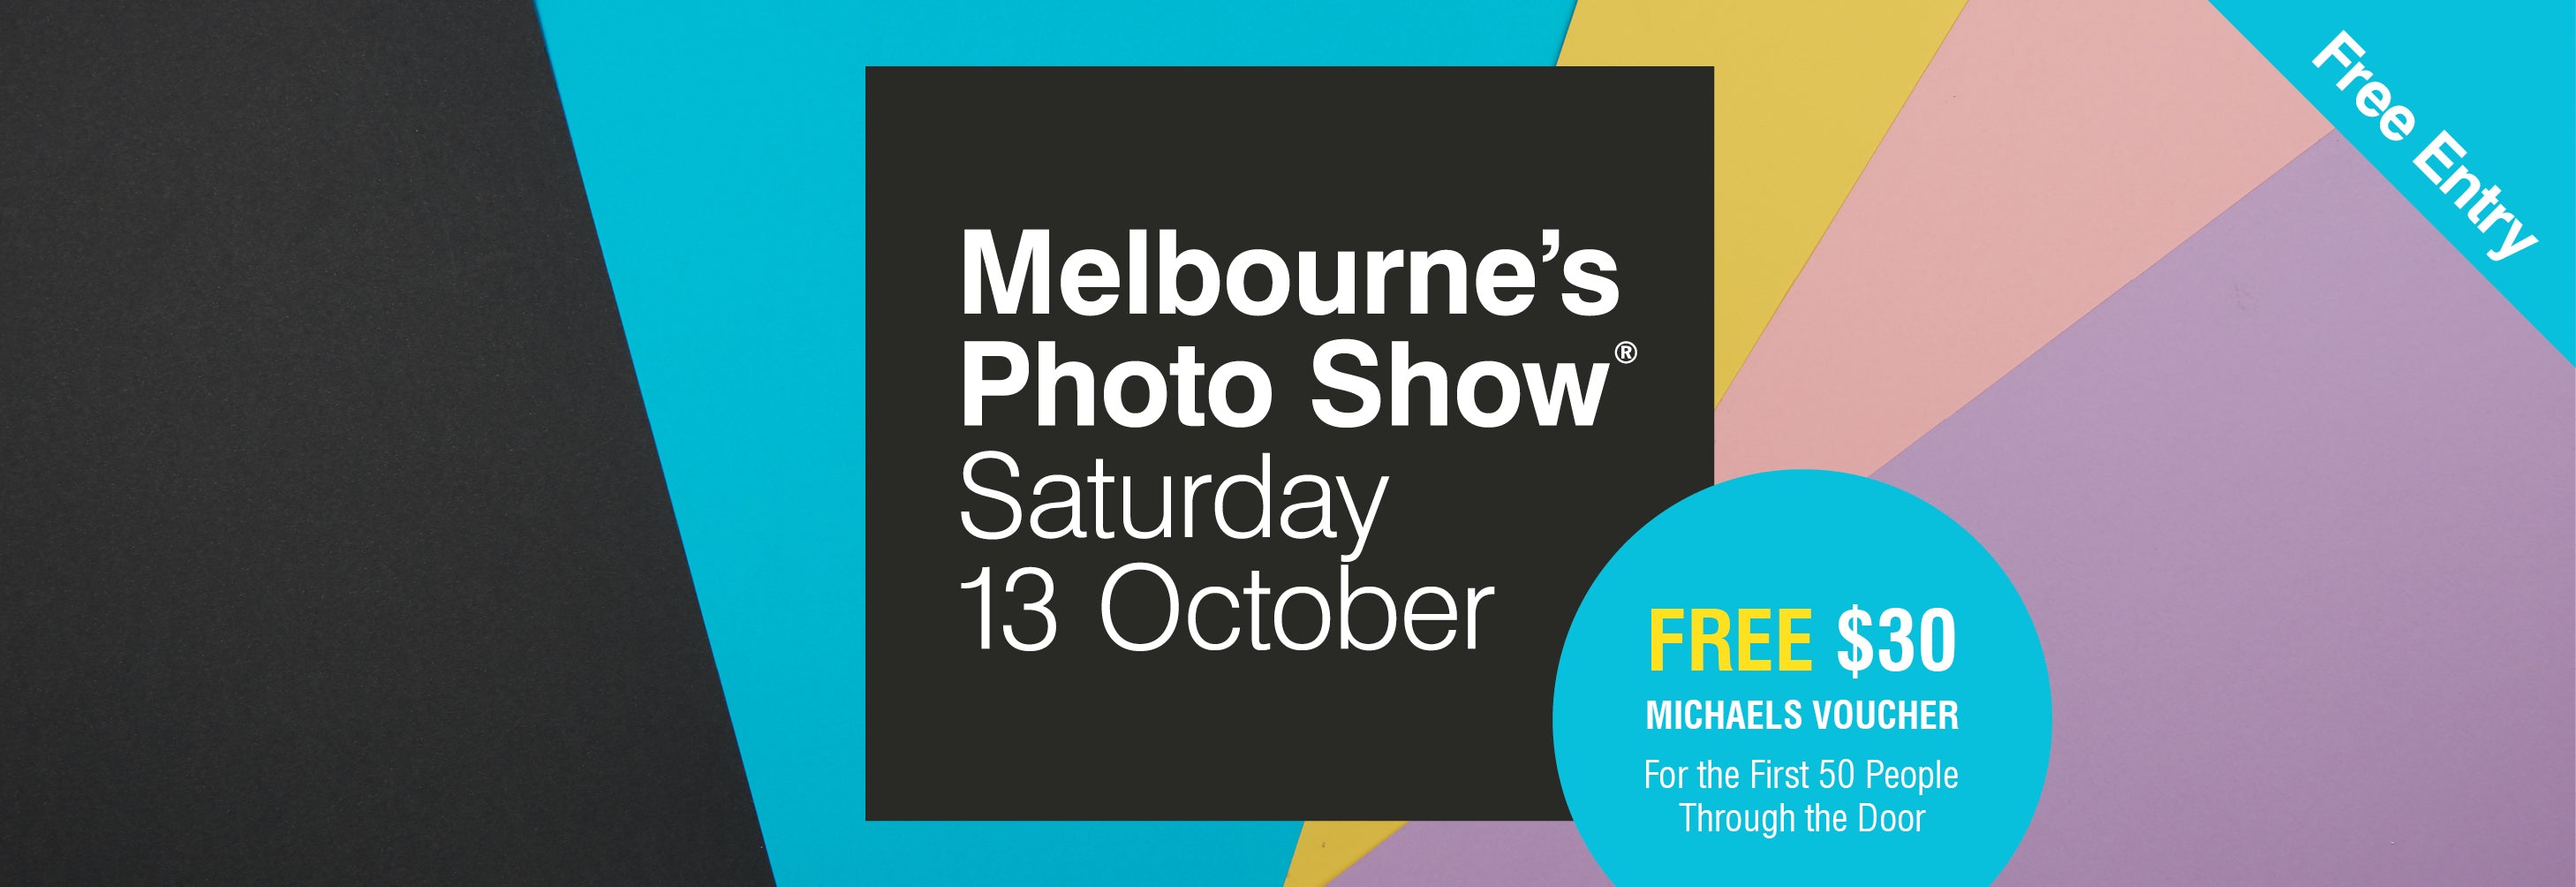 Melbourne's Photo Show 13 October: Full Program Just Announced